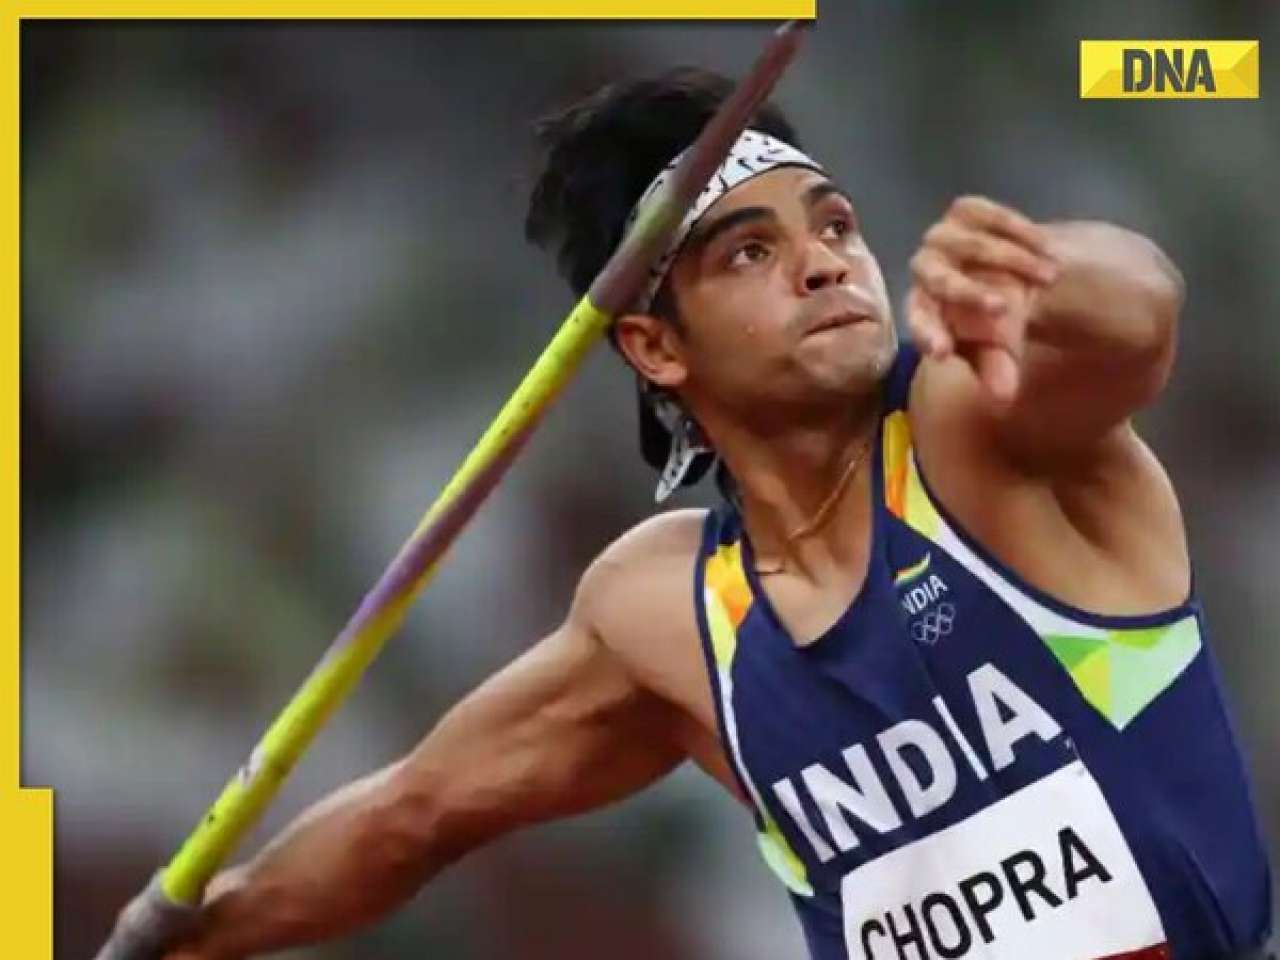 Indian javelin star Neeraj Chopra bags silver in Doha Diamond League with 88.36m throw